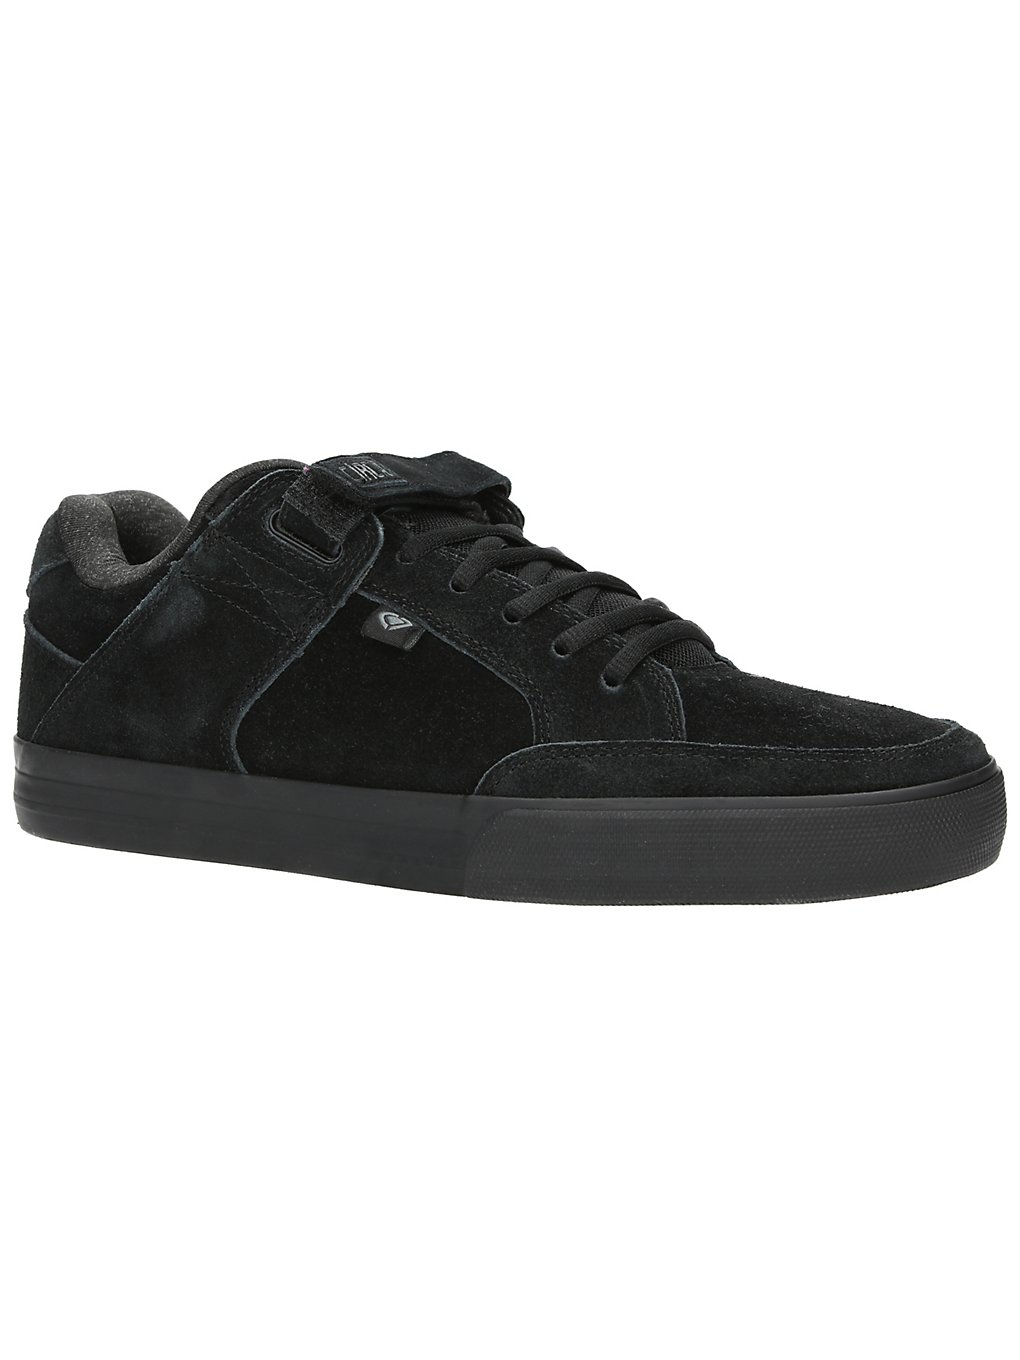 Circa 205 Vulc Skate Shoes noir